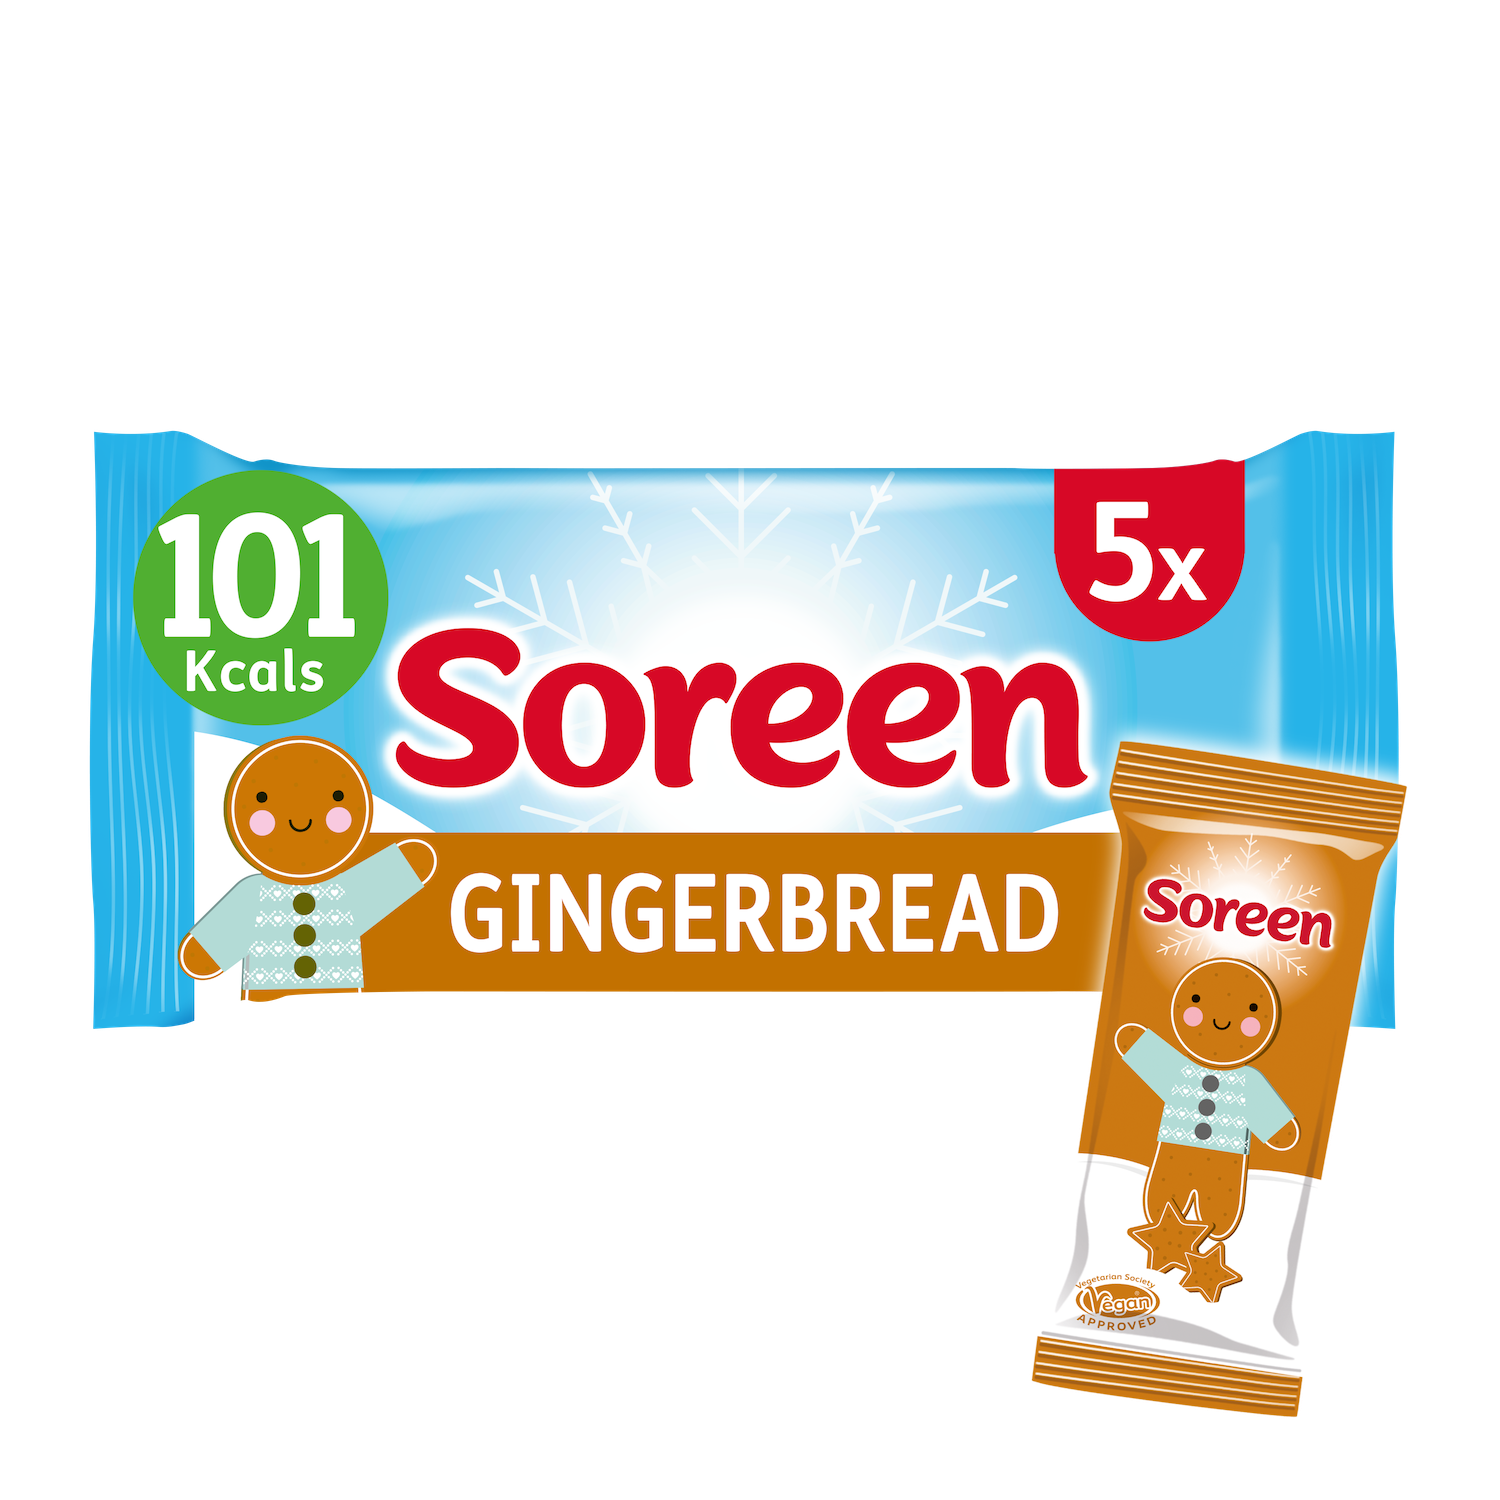 New for Christmas – Soreen’s snowy Christmas loaf